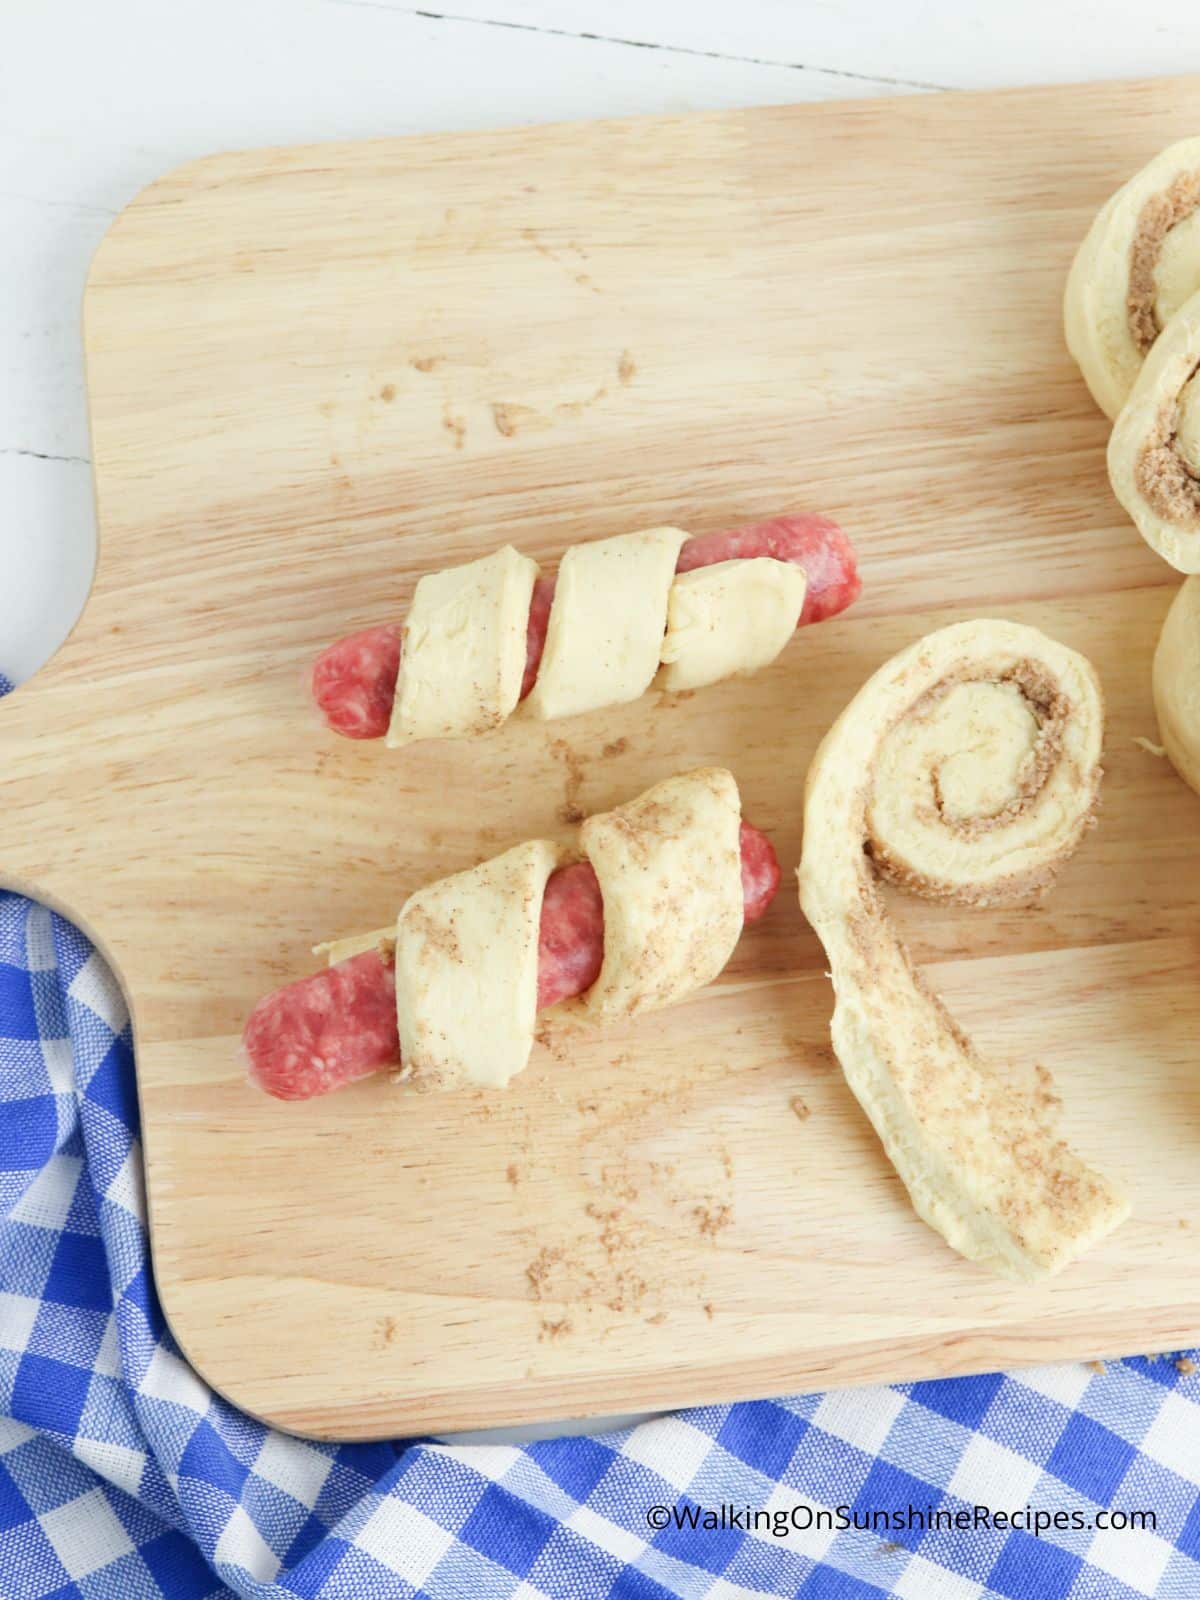 wrap cinnamon roll around breakfast sausage links for easy breakfast idea.